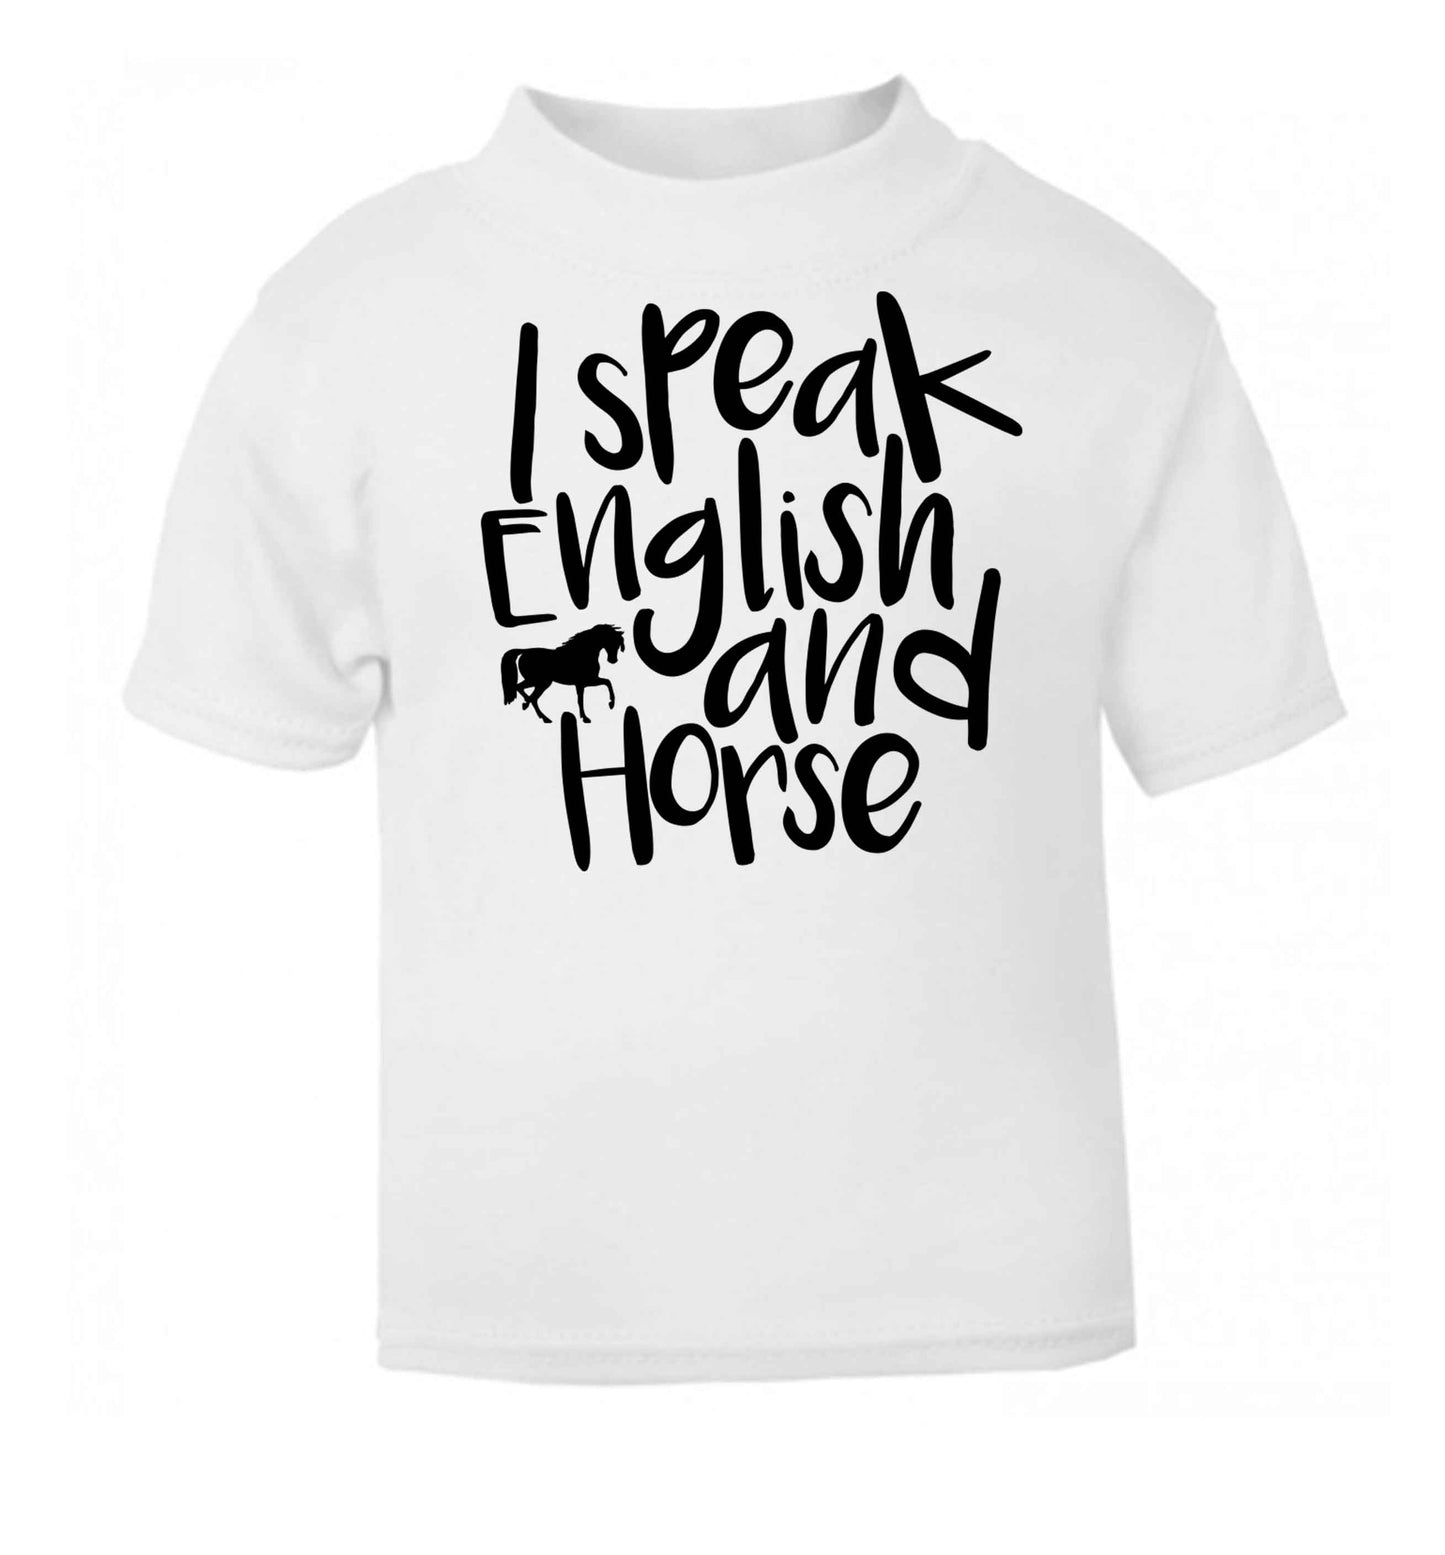 I speak English and horse white baby toddler Tshirt 2 Years